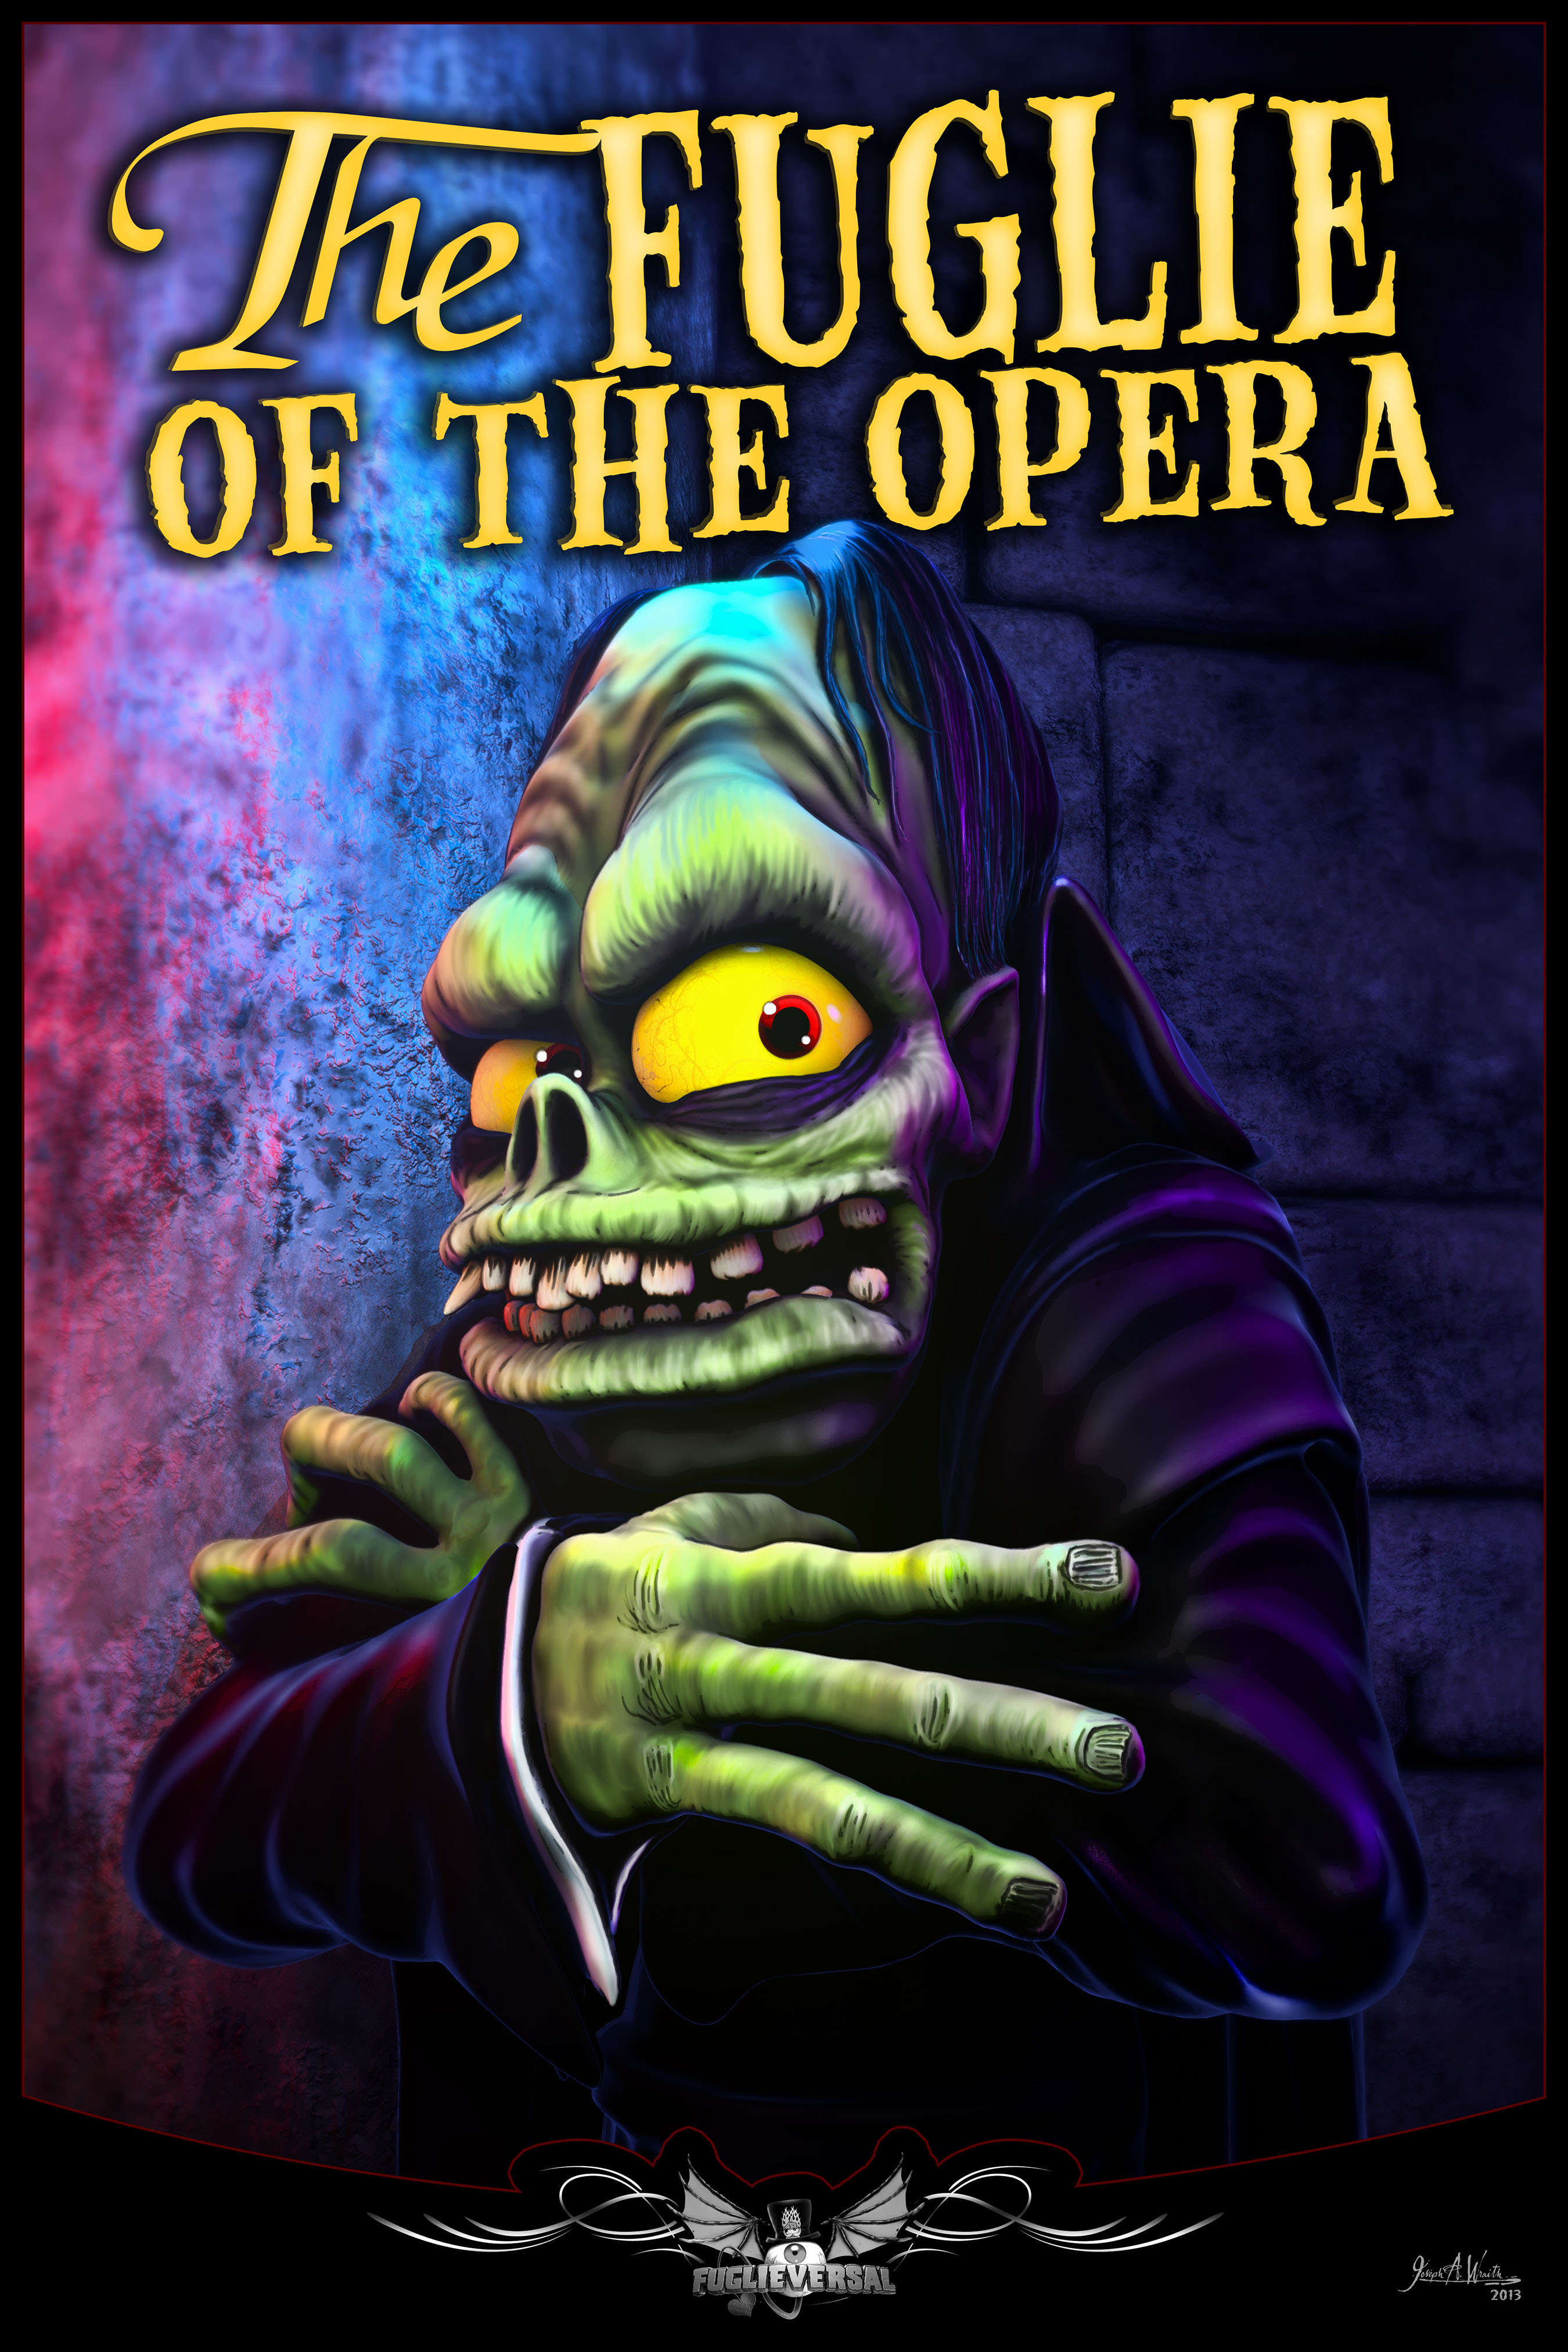 The Fuglies presents Fuglieversal Monsters: The Fuglie of the Opera
©2014 Copyright, Joseph A. Wraith